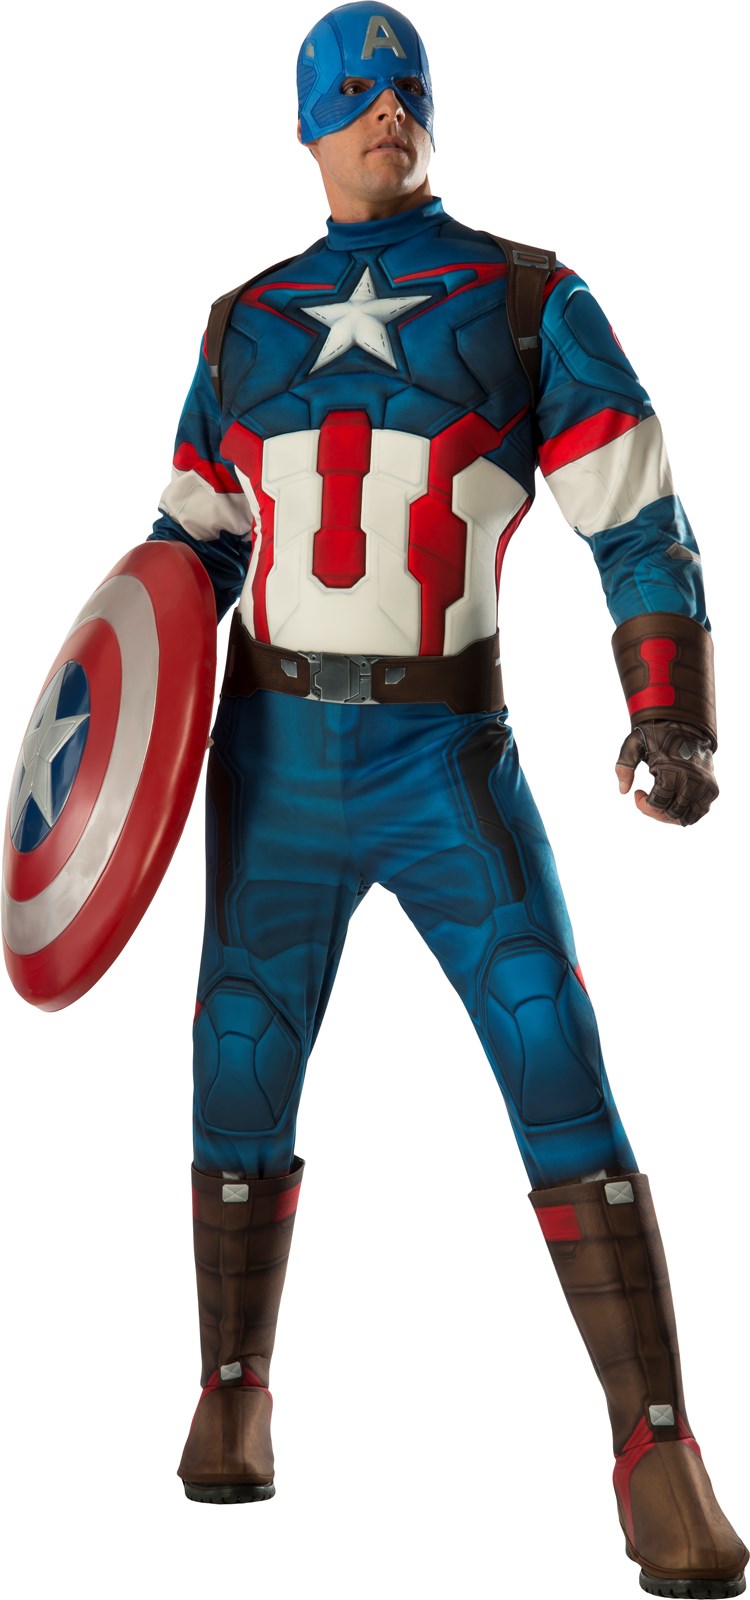 Avengers 2 - Age of Ultron:  Deluxe Captain America Costume For Men